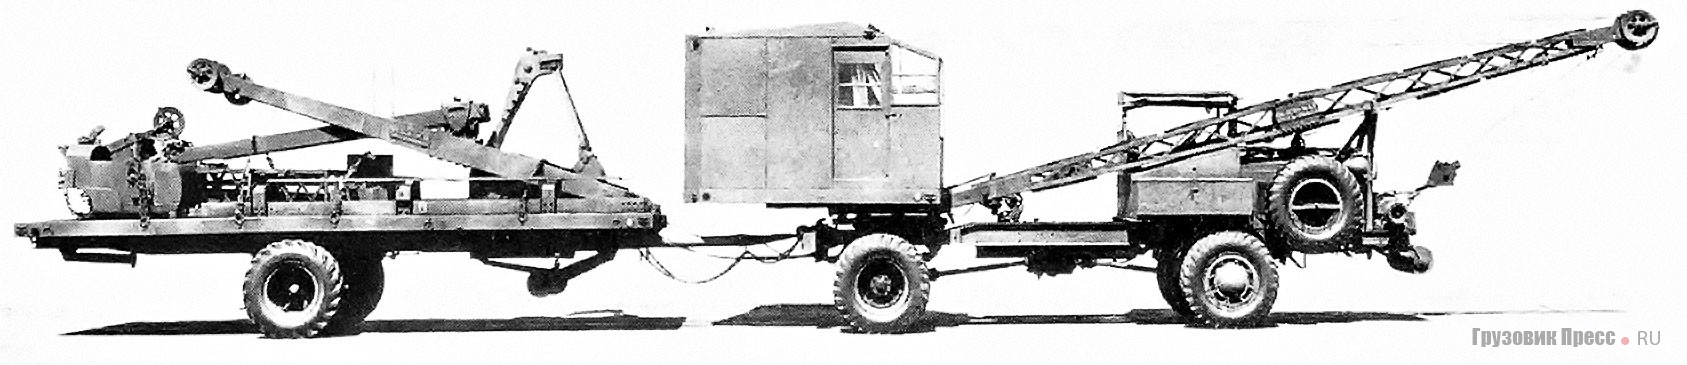 Экскаватор-кран Quick-Way Model E на шасси Coleman G-55A c прицепом Timpte QW-T8. 1941–1943 гг.